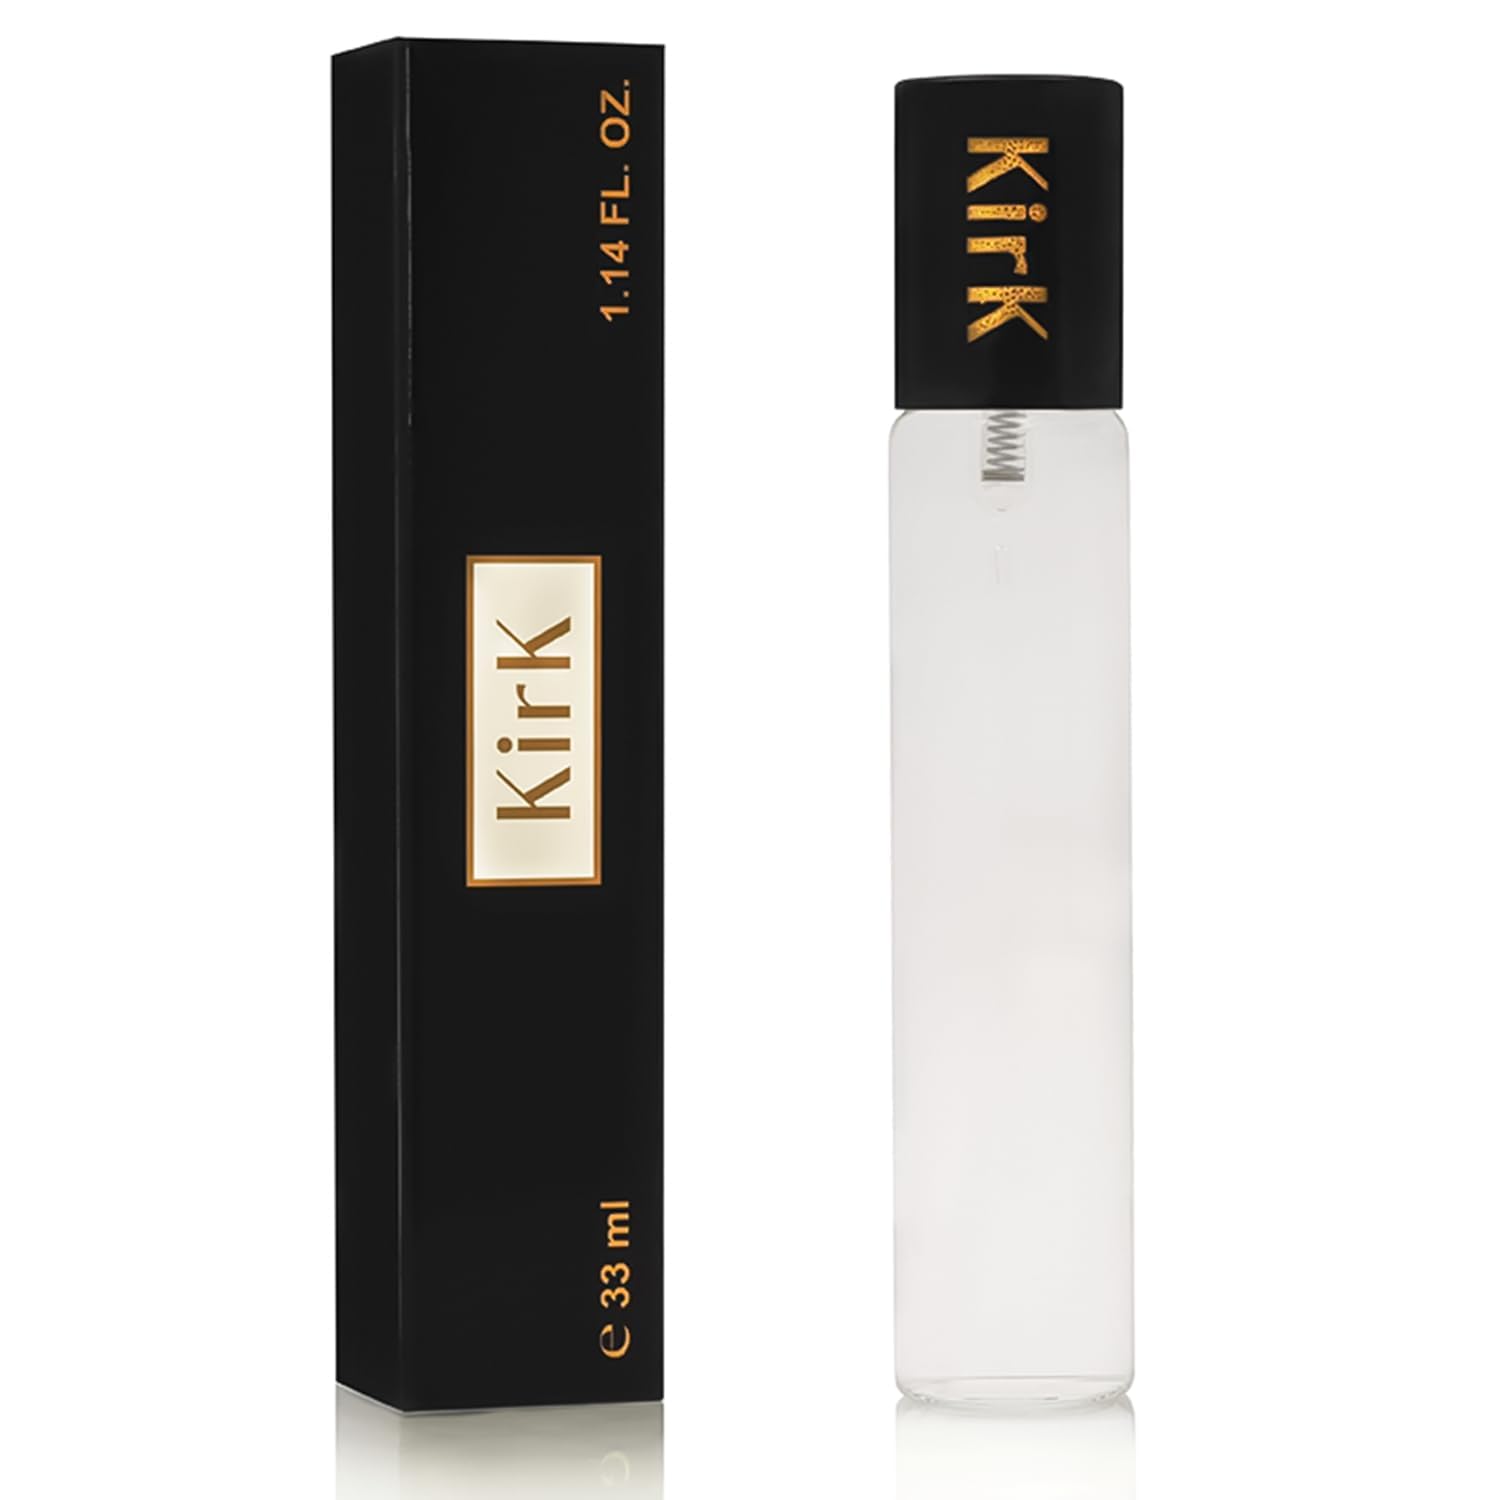 Perfume Women\'s Fragrance Spray - The Inspired Pendant as Eau de Parfum for Men and Women Fragrance Twin